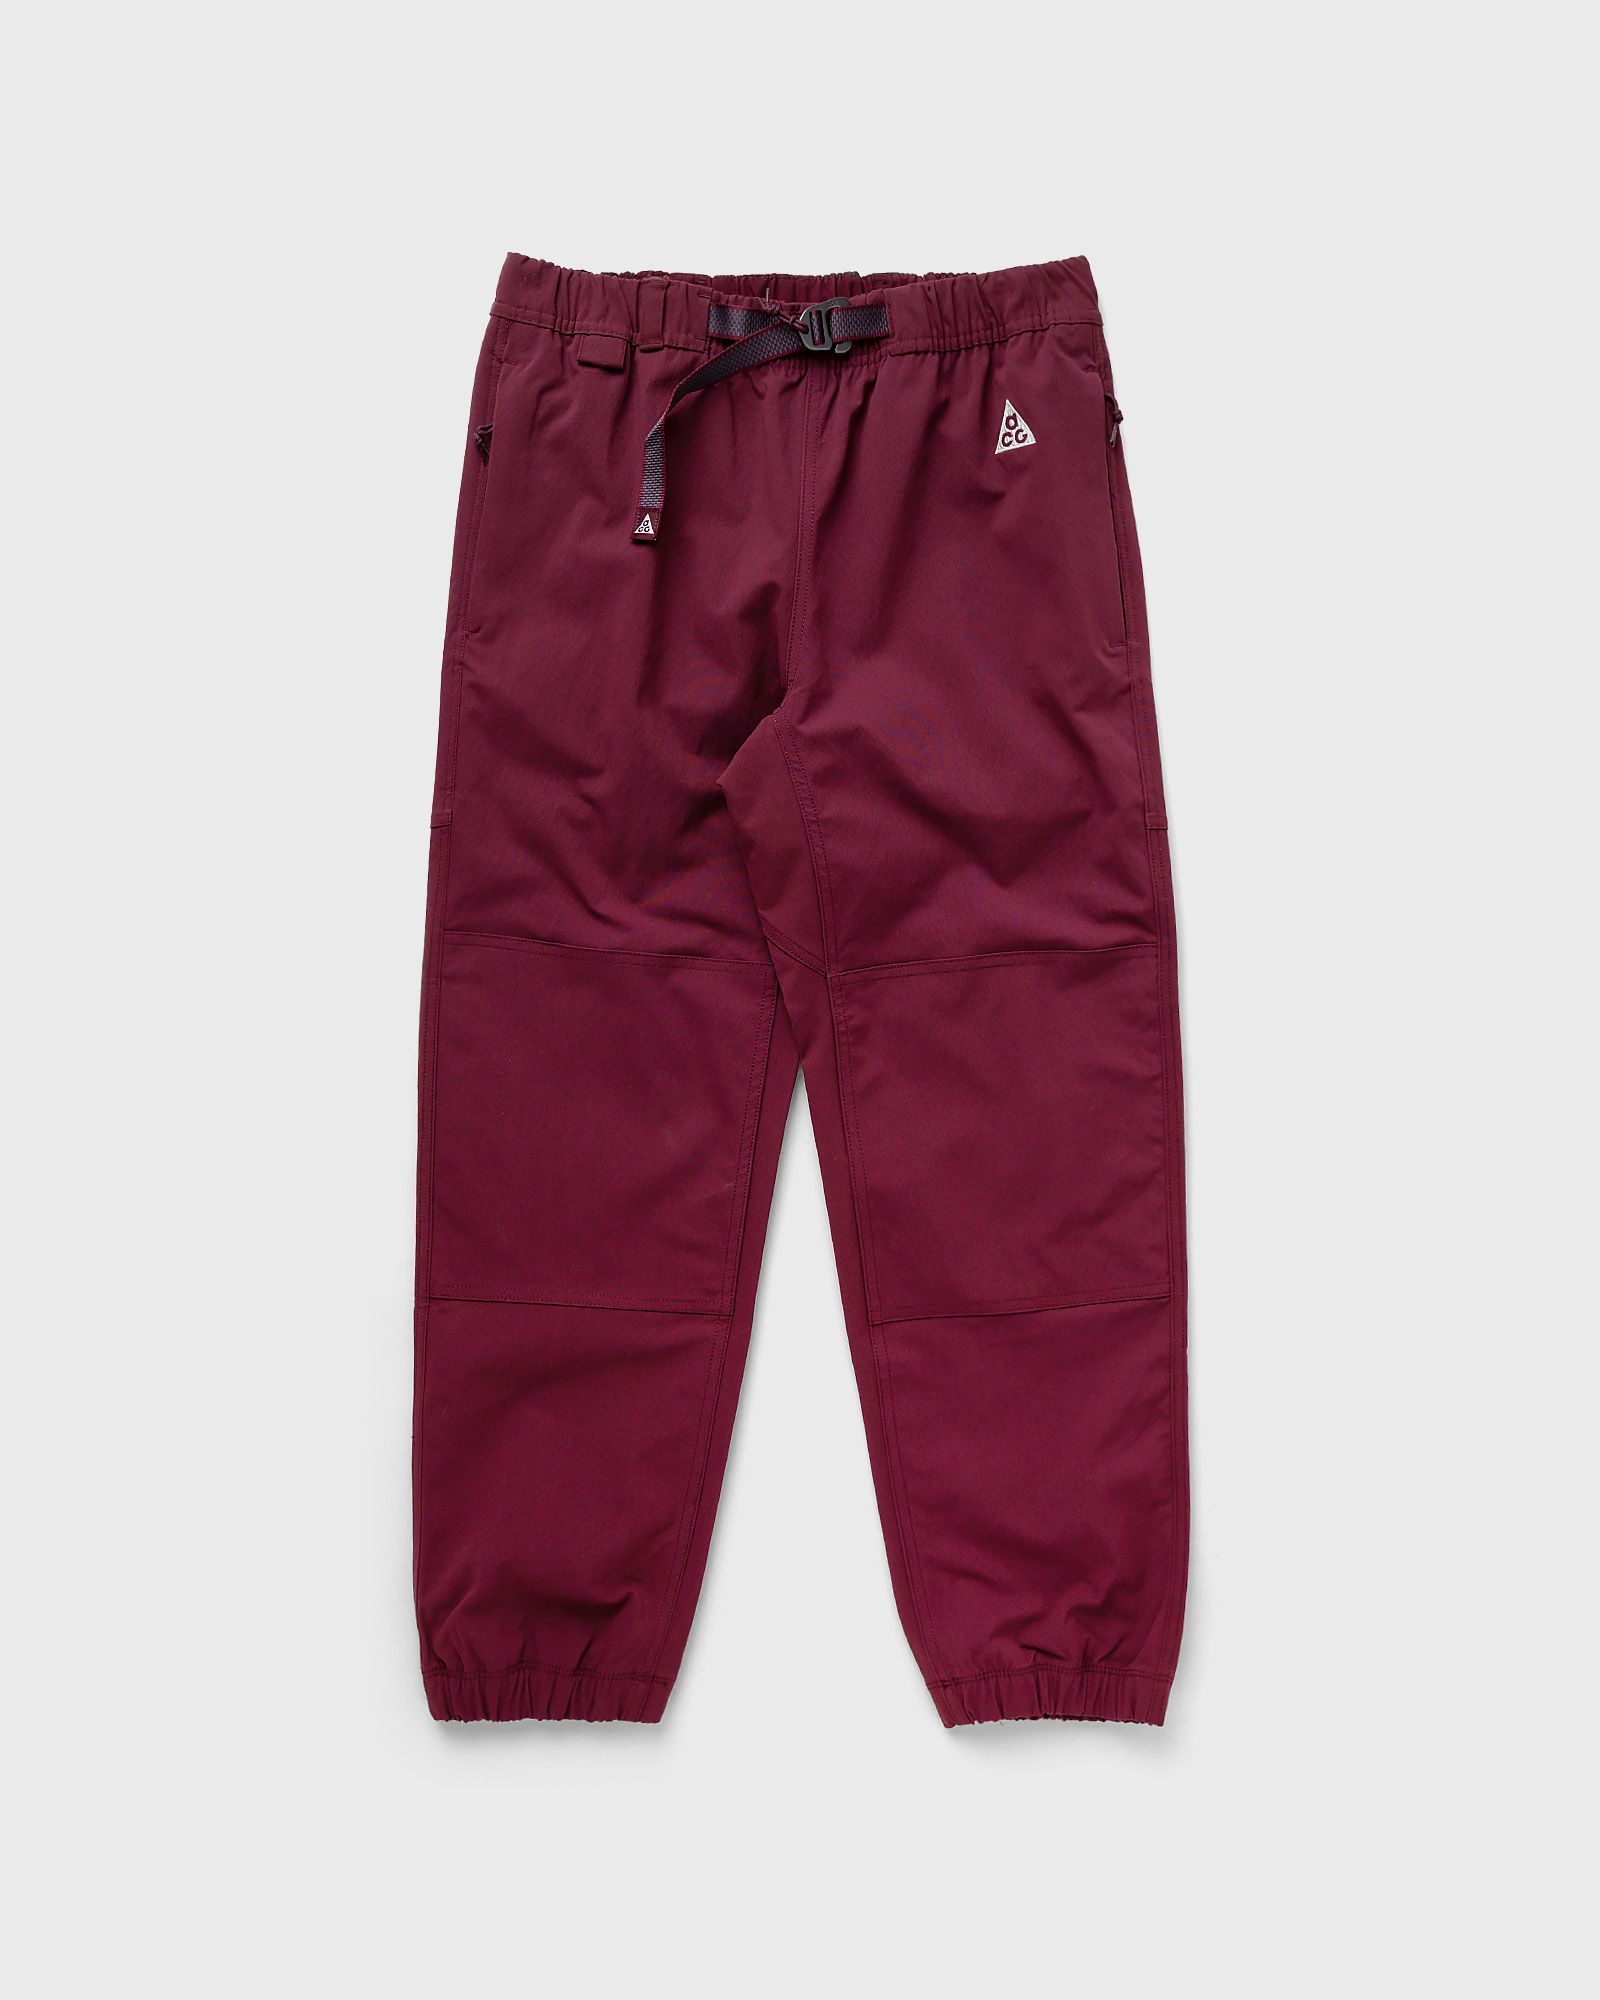 Nike - acg men's trail pants men casual pants red in größe:xl